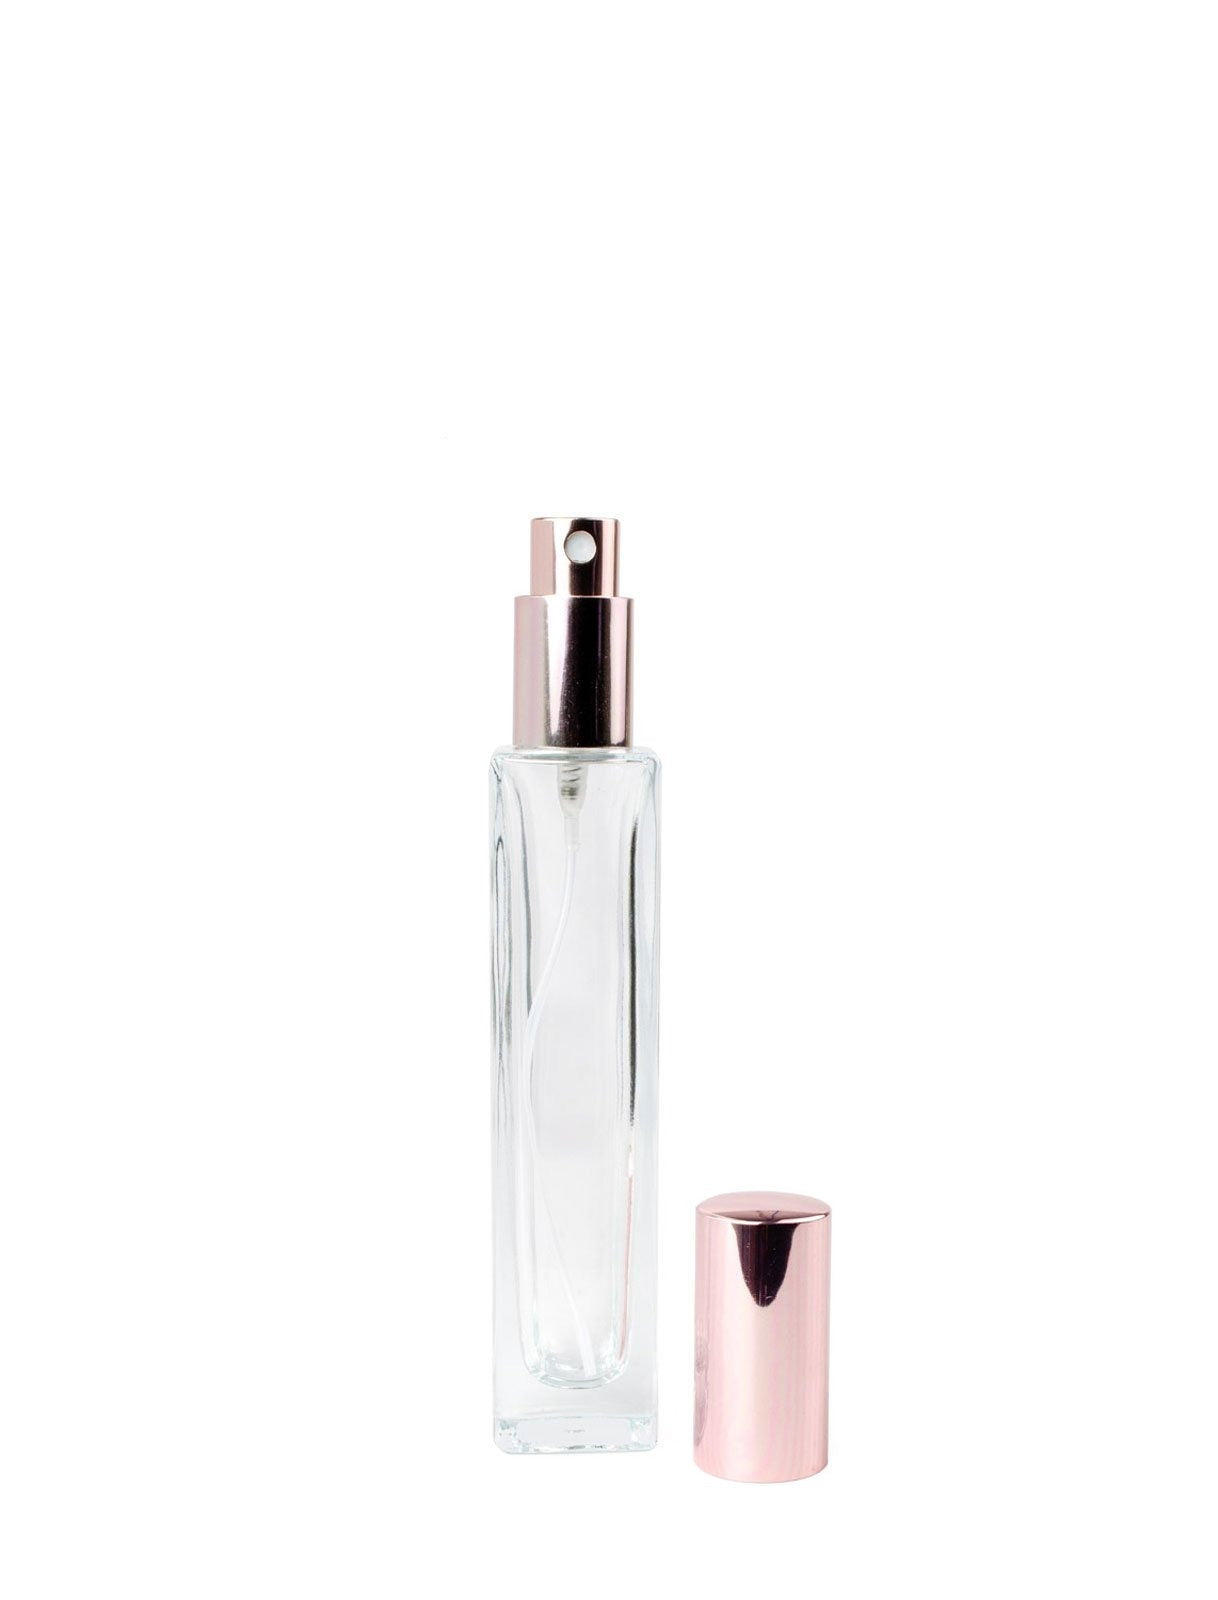 10ml Mini Empty Perfume Atomizer Cylinder Shape Refillable Fine Mist Spray  Bottle Portable Glass Spr…See more 10ml Mini Empty Perfume Atomizer